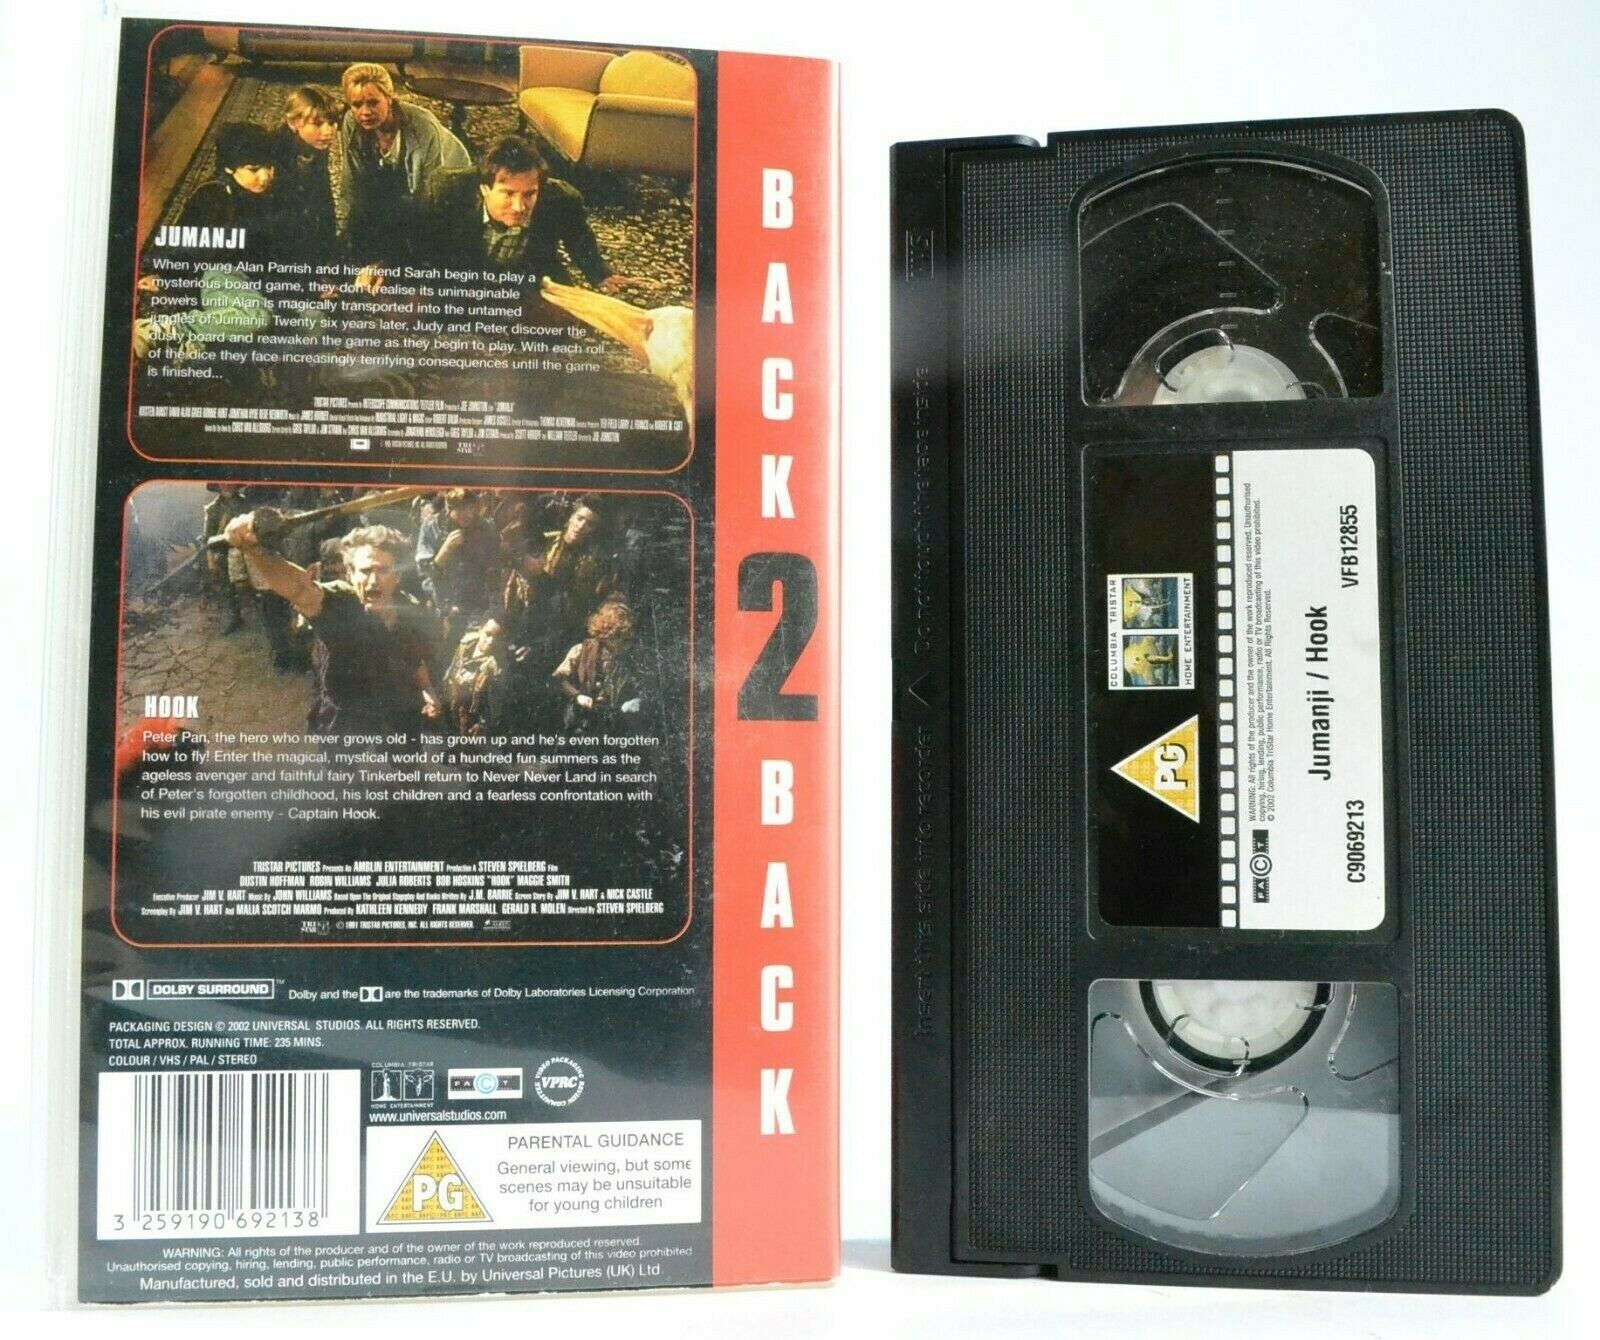 Jumanji (1995) / Hook (1991); [Double Feature] - Robin Williams - Kids - Pal VHS-